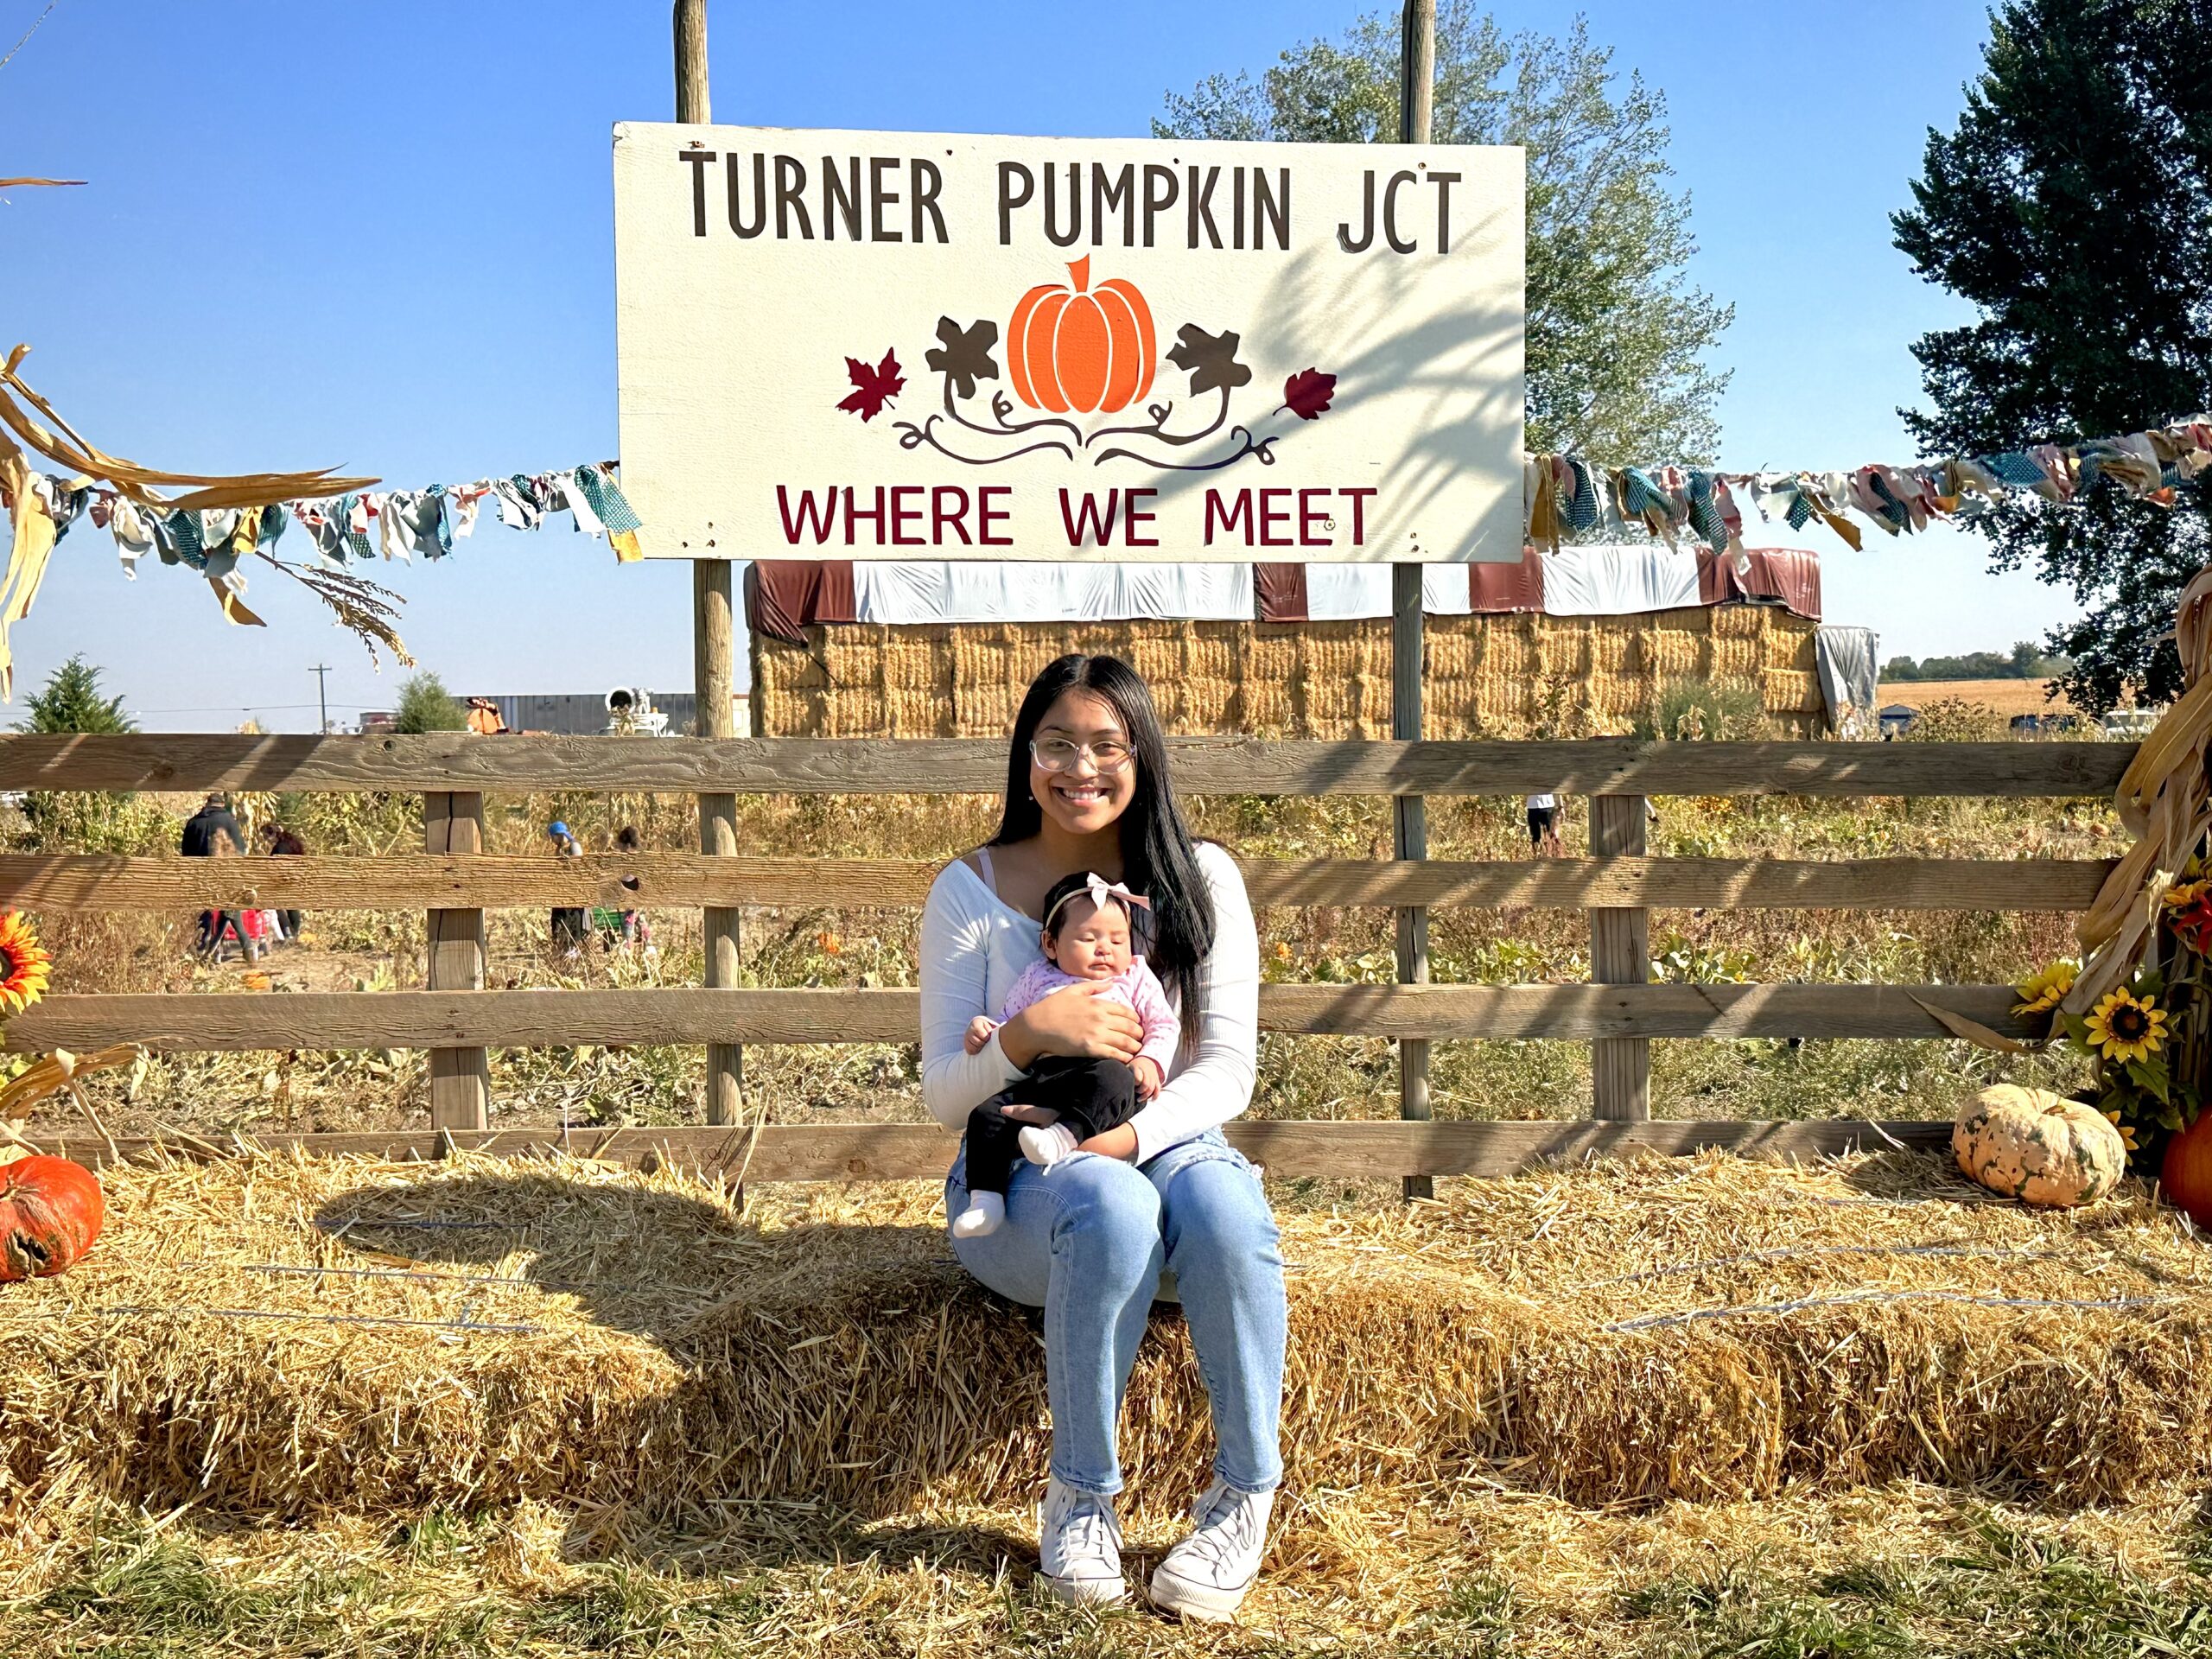 Turner pumpkin junction -108